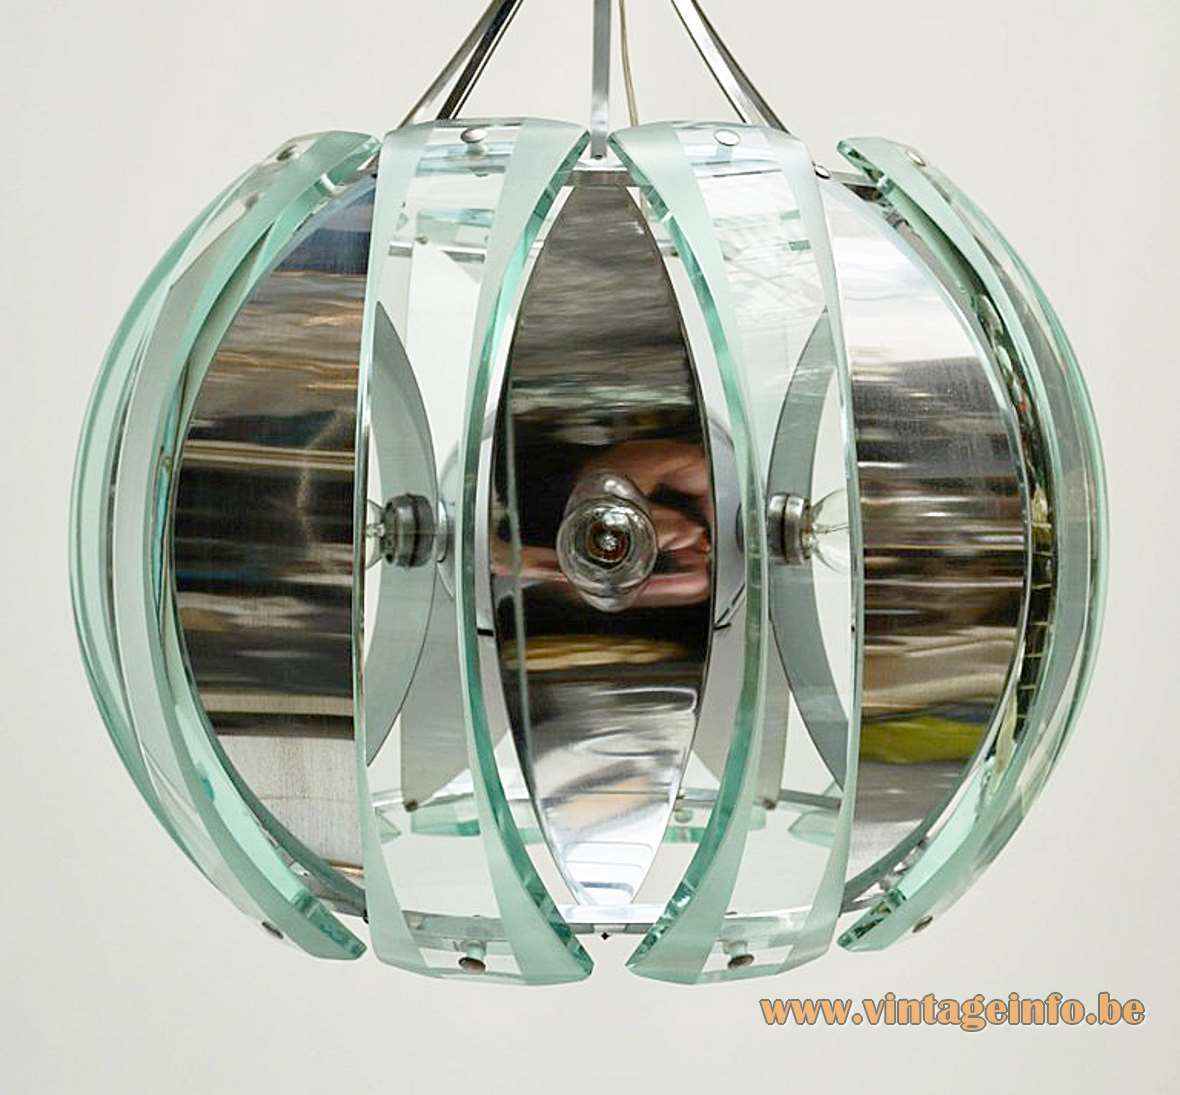 Veca 1960s chrome & green glass chandelier curved slats metal chain E27 socket 1970s Fontana Arte Italy